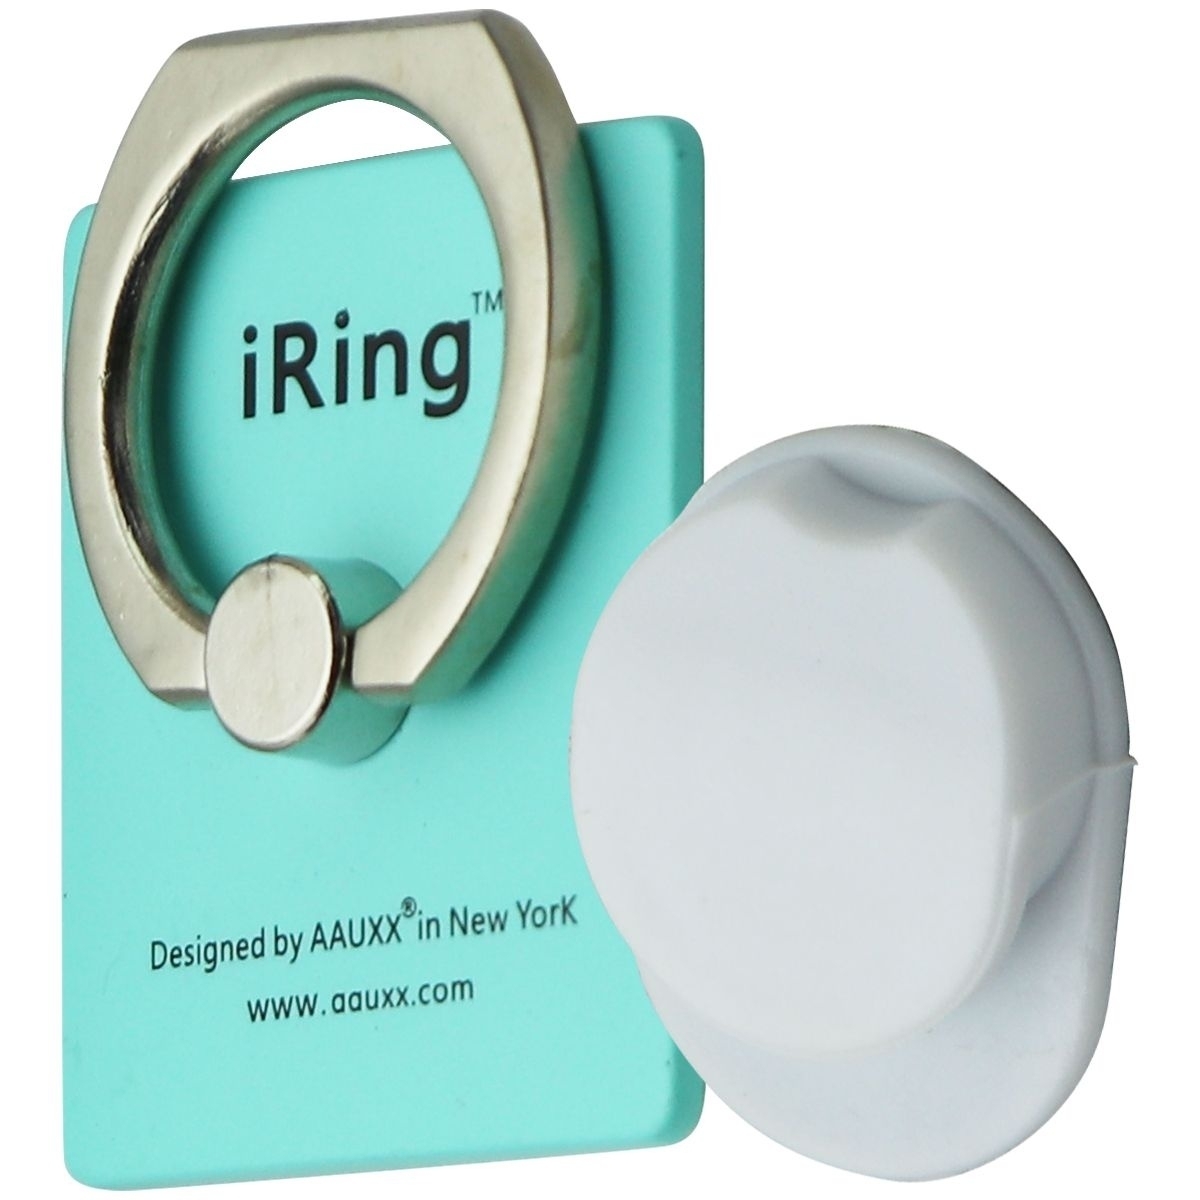 Ring Premium Kickstand Ring Hook And Universal Phone Mount - Teal/White